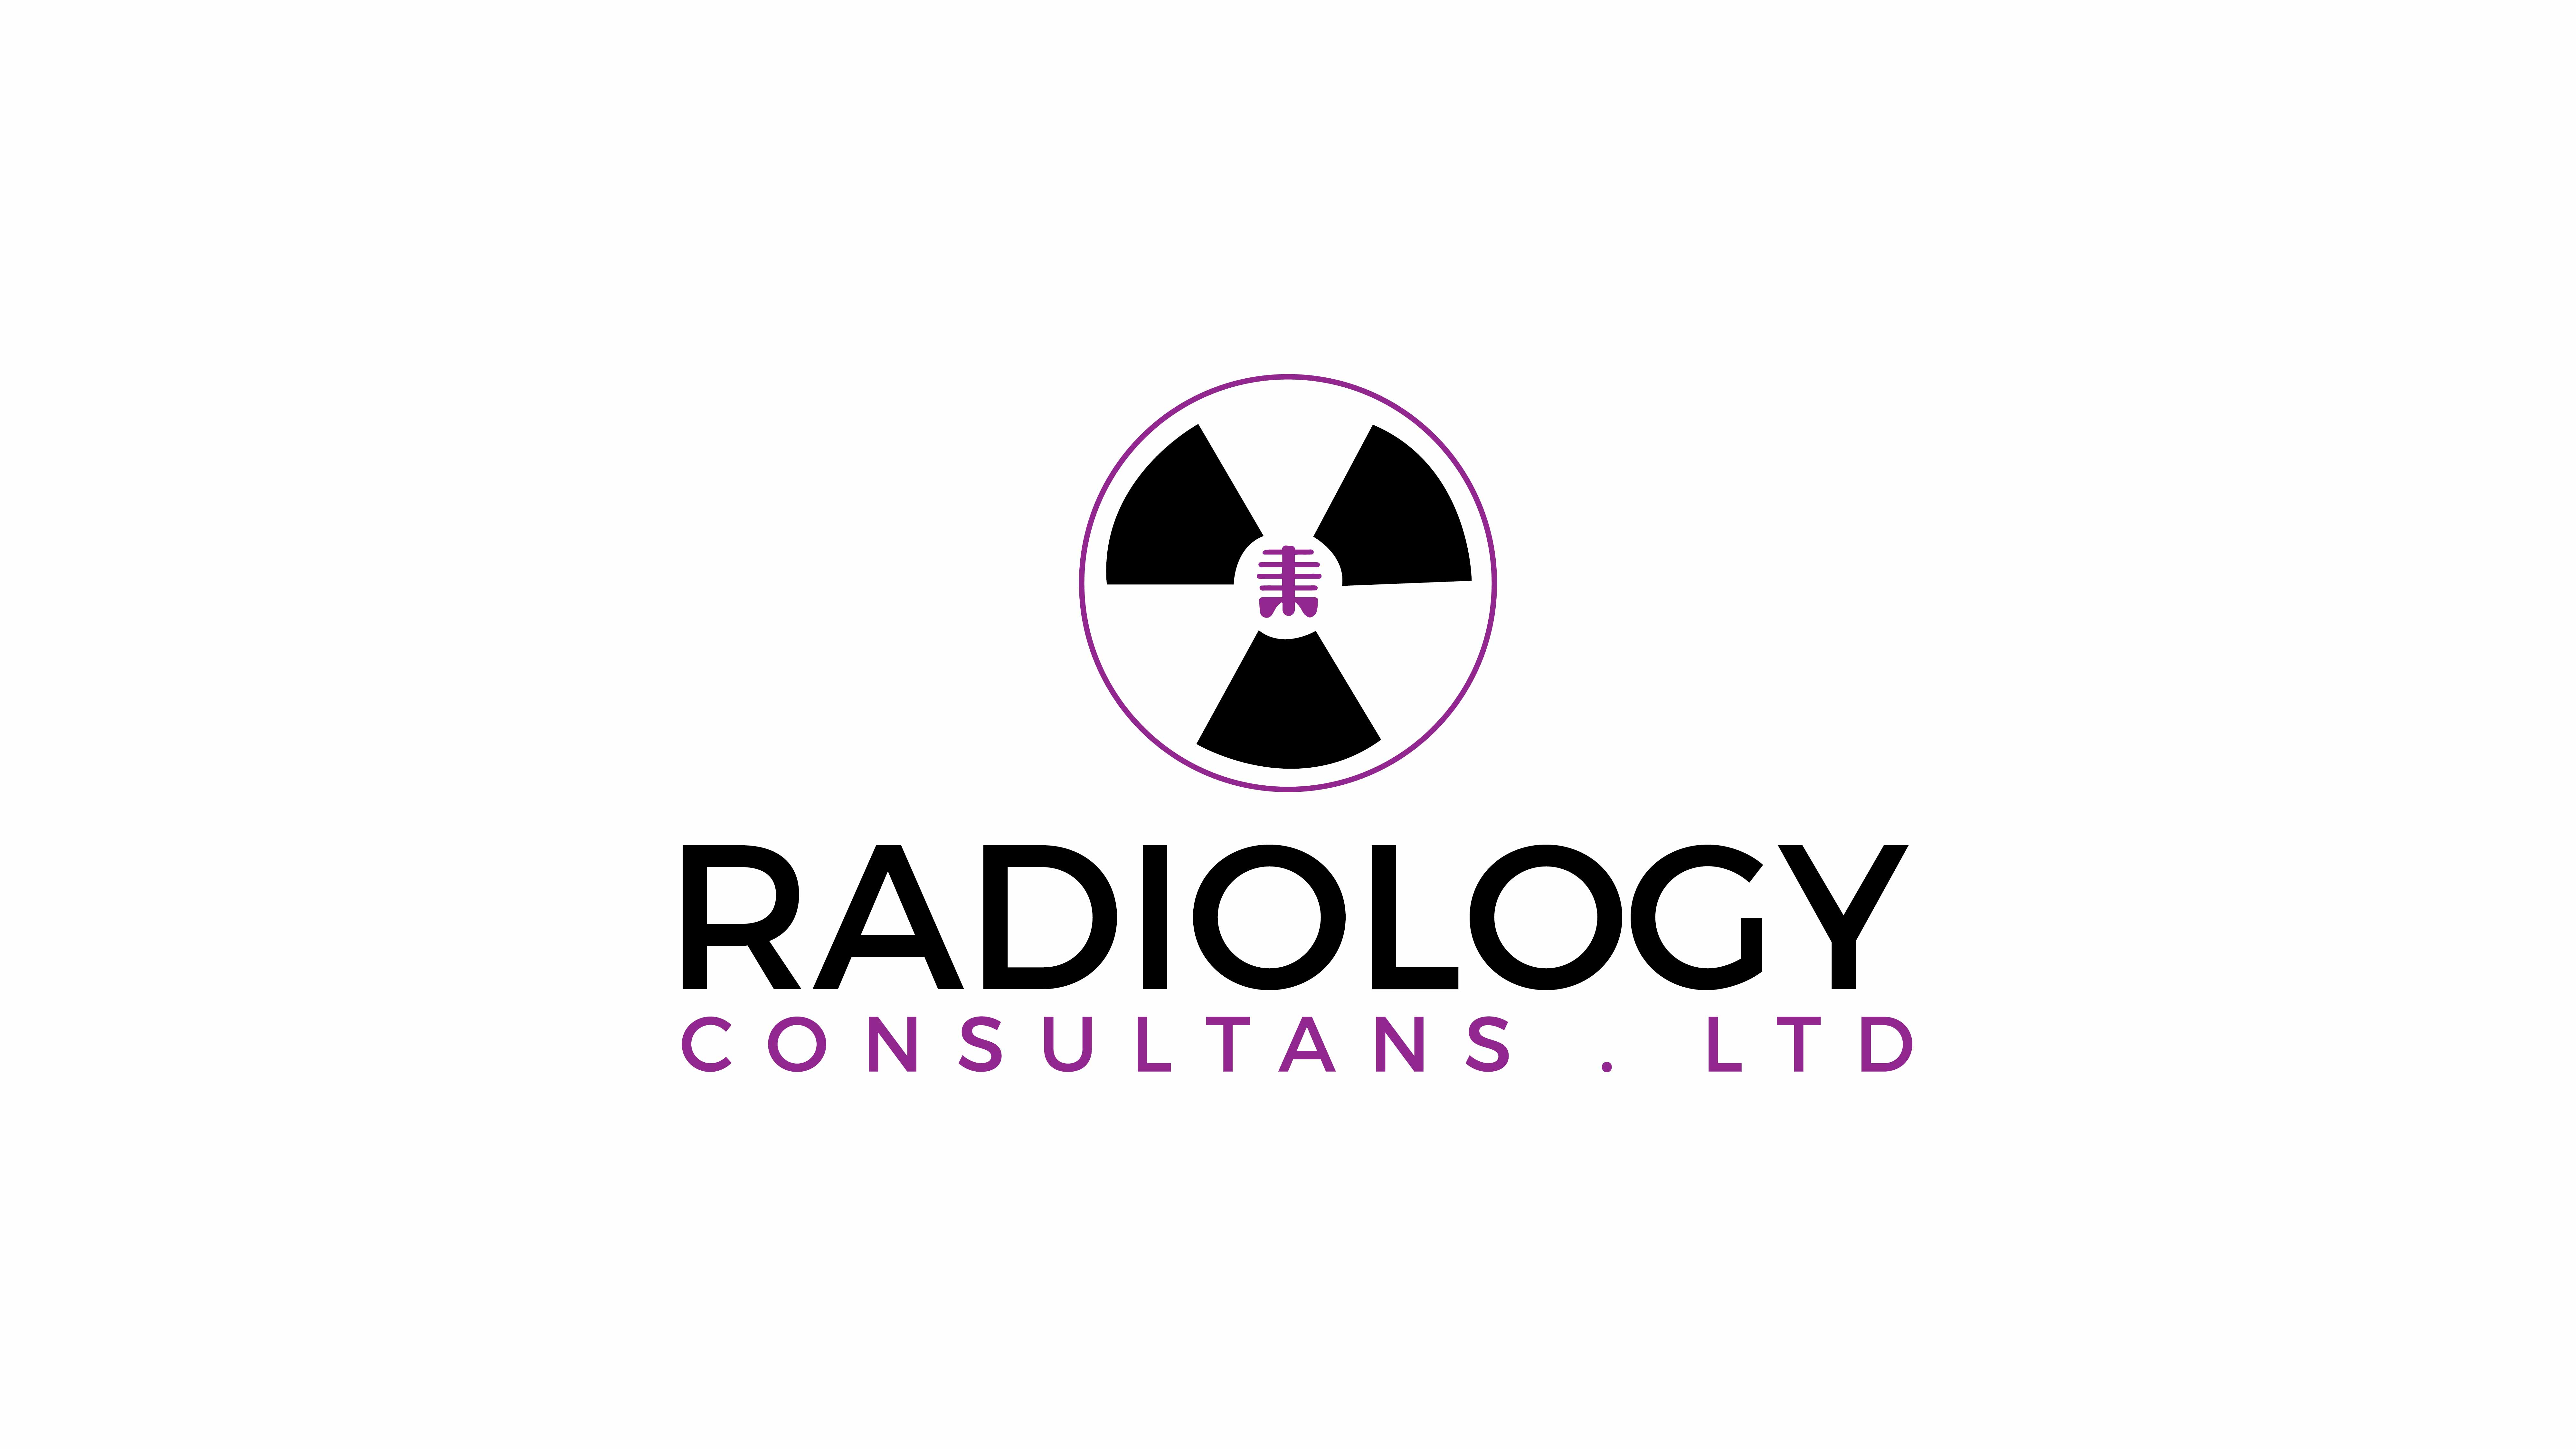 Radiology Logo - Logo Design. 'Radiology Consultants, Ltd' design project